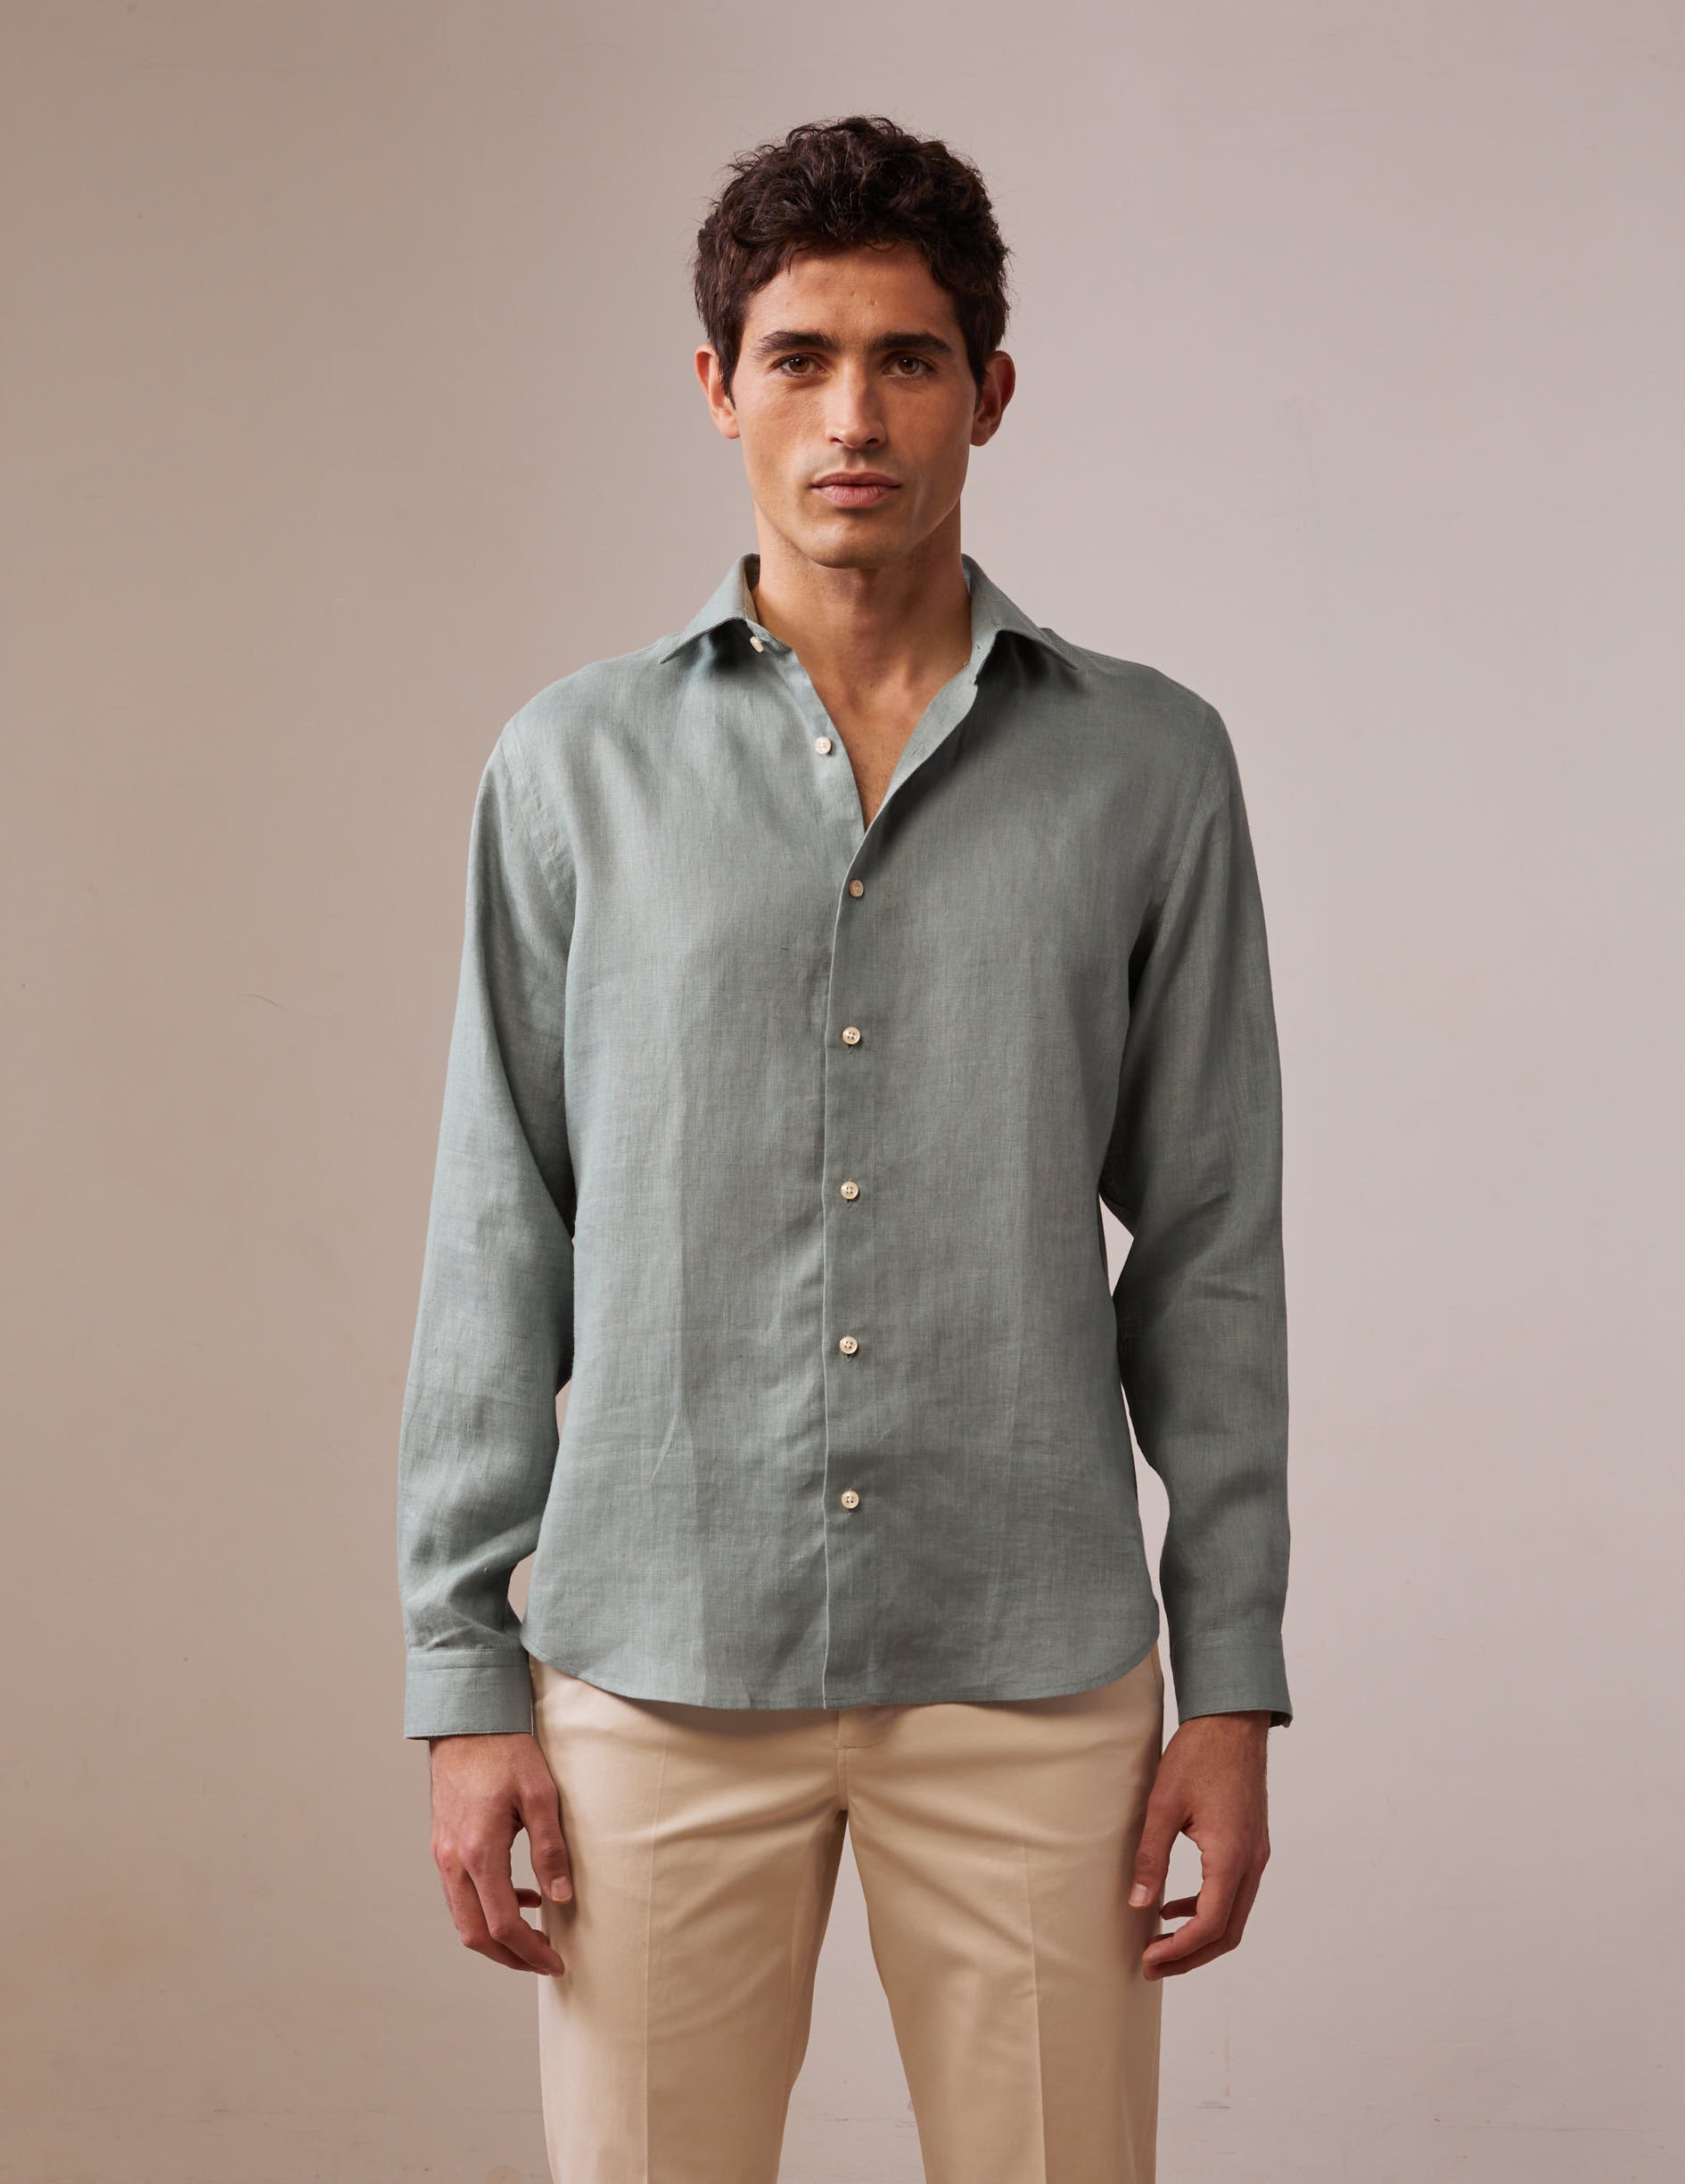 Auguste shirt in sage linen - Linen - French Collar